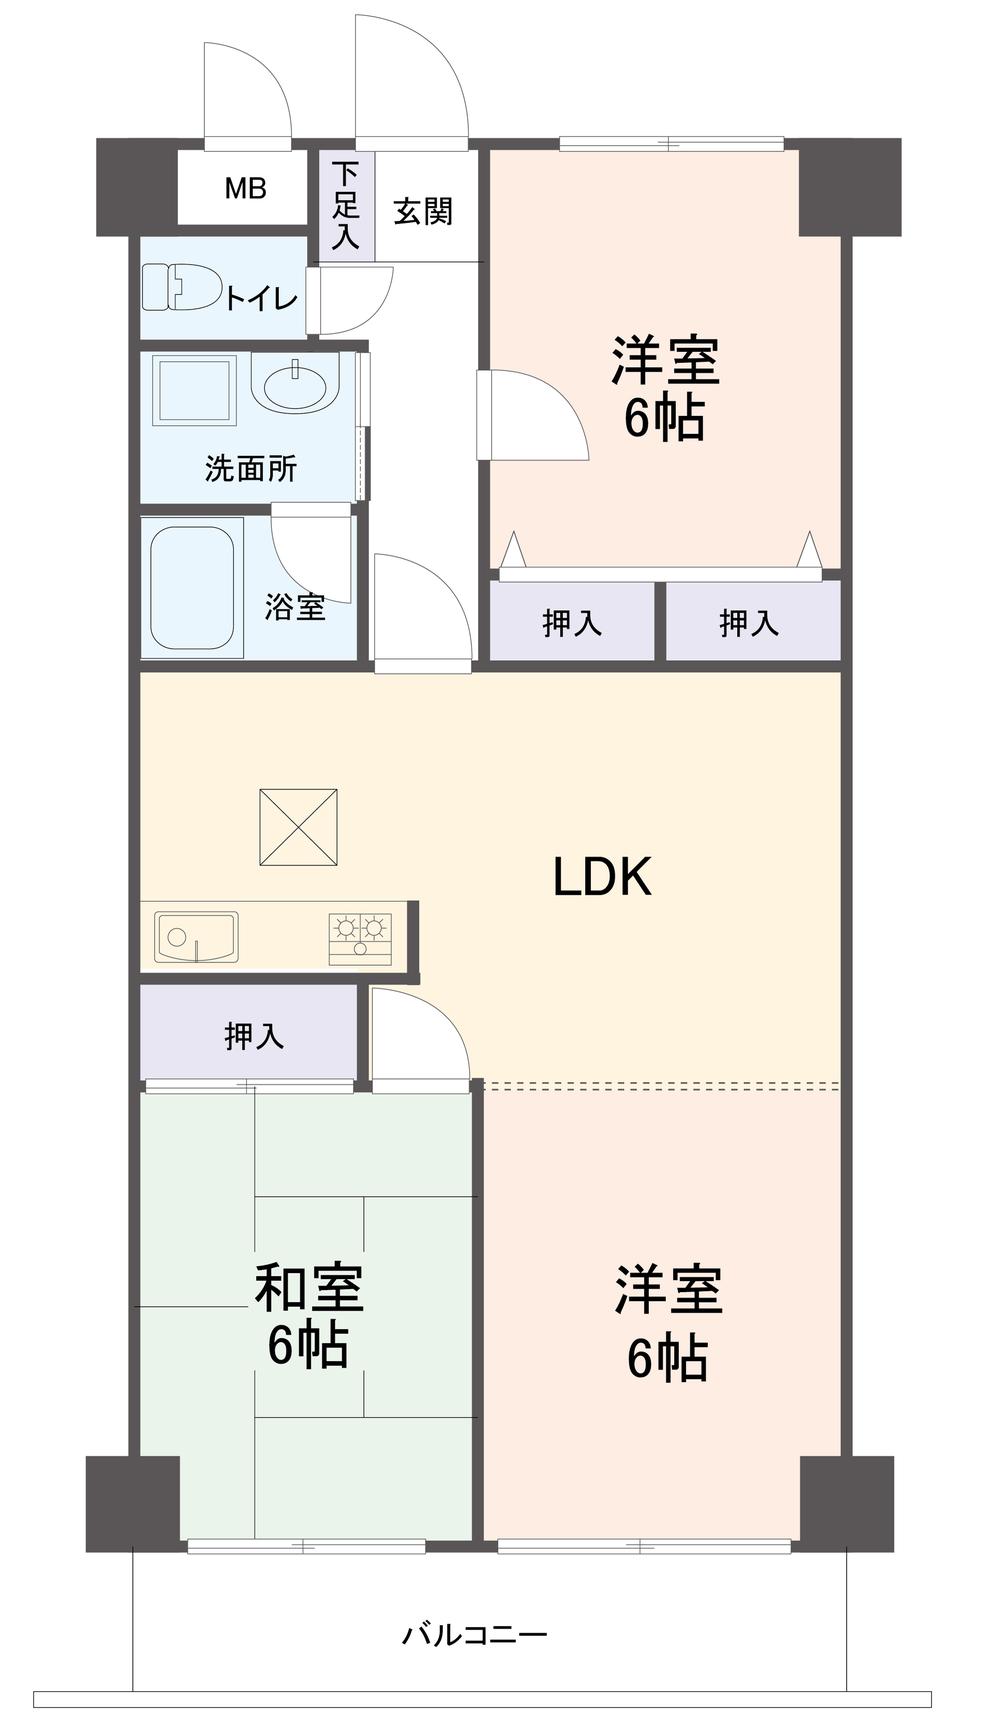 Floor plan. 3LDK, Price 9.3 million yen, Occupied area 59.82 sq m